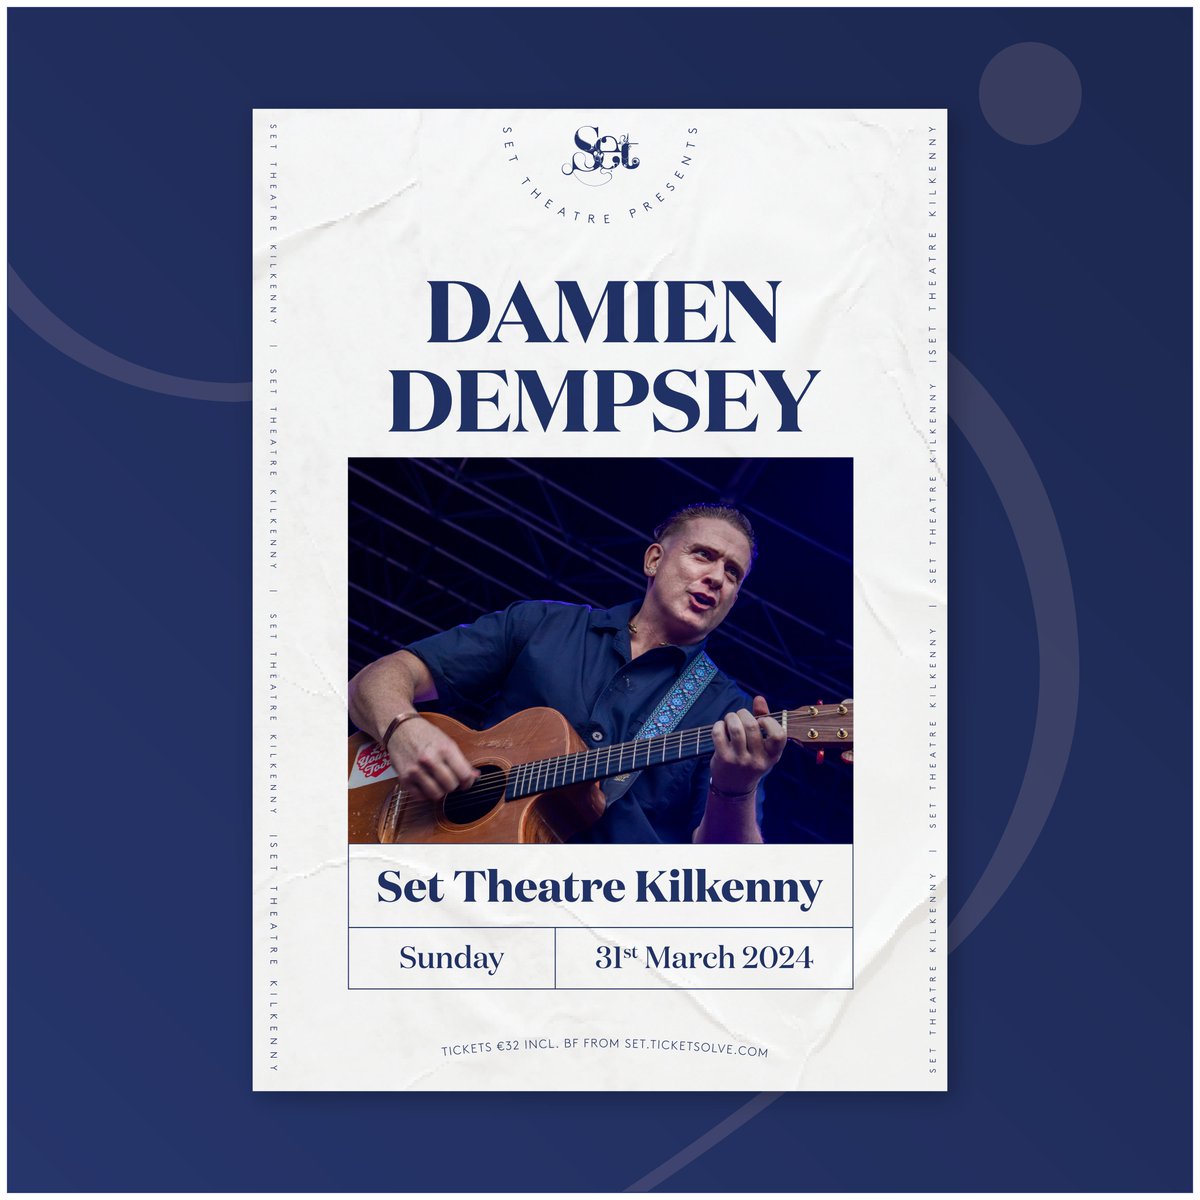 𝗧𝗛𝗜𝗦 𝗪𝗘𝗘𝗞𝗘𝗡𝗗 29 Mar Tommy Tiernan (SOLD OUT) 30 Mar Emma Doran: Dilemma (SOLD OUT) 31 Mar Damien Dempsey (SOLD OUT)